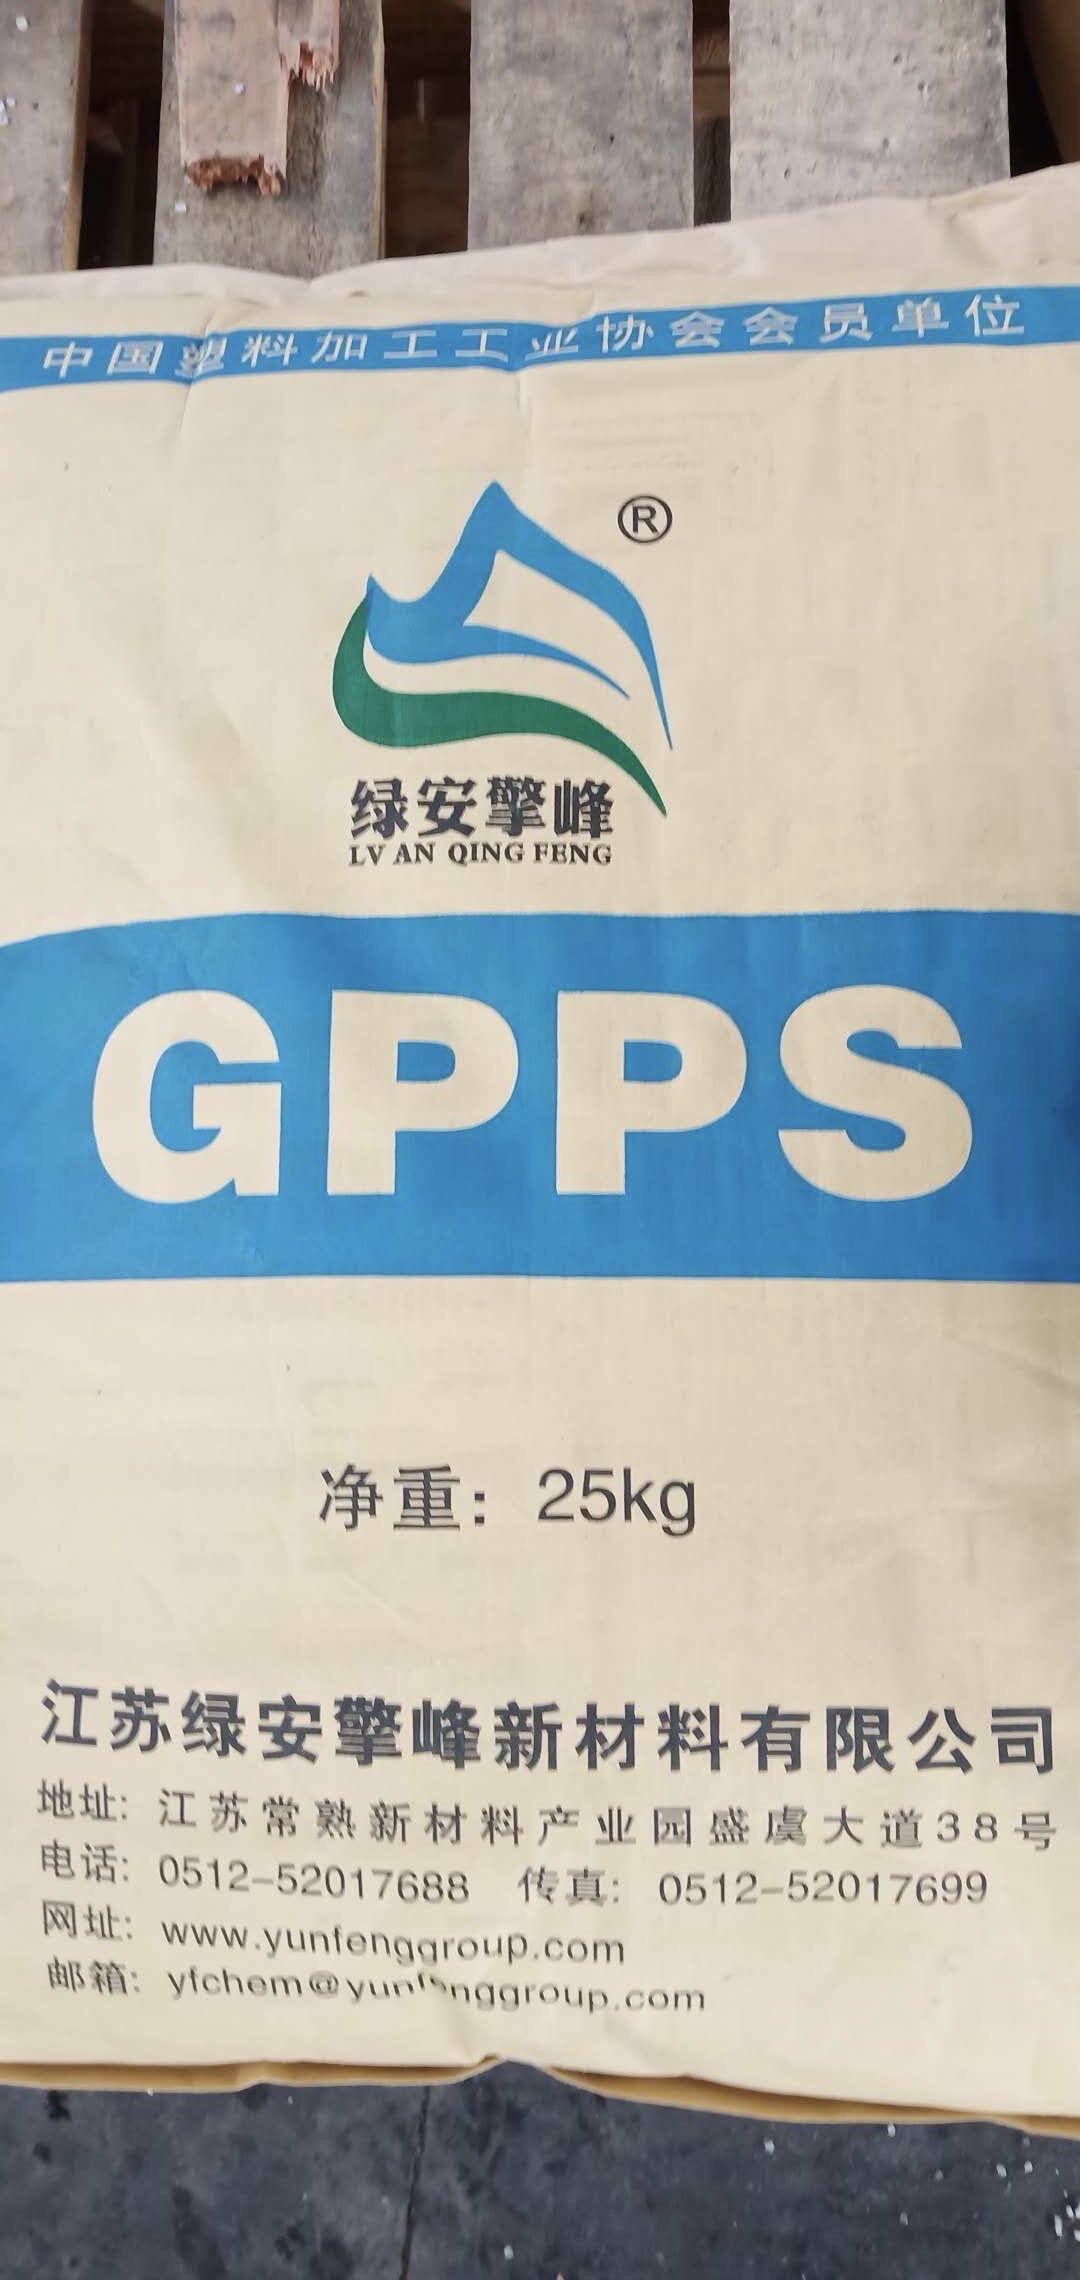 GPPS 绿安擎峰 GP-525 透明级6